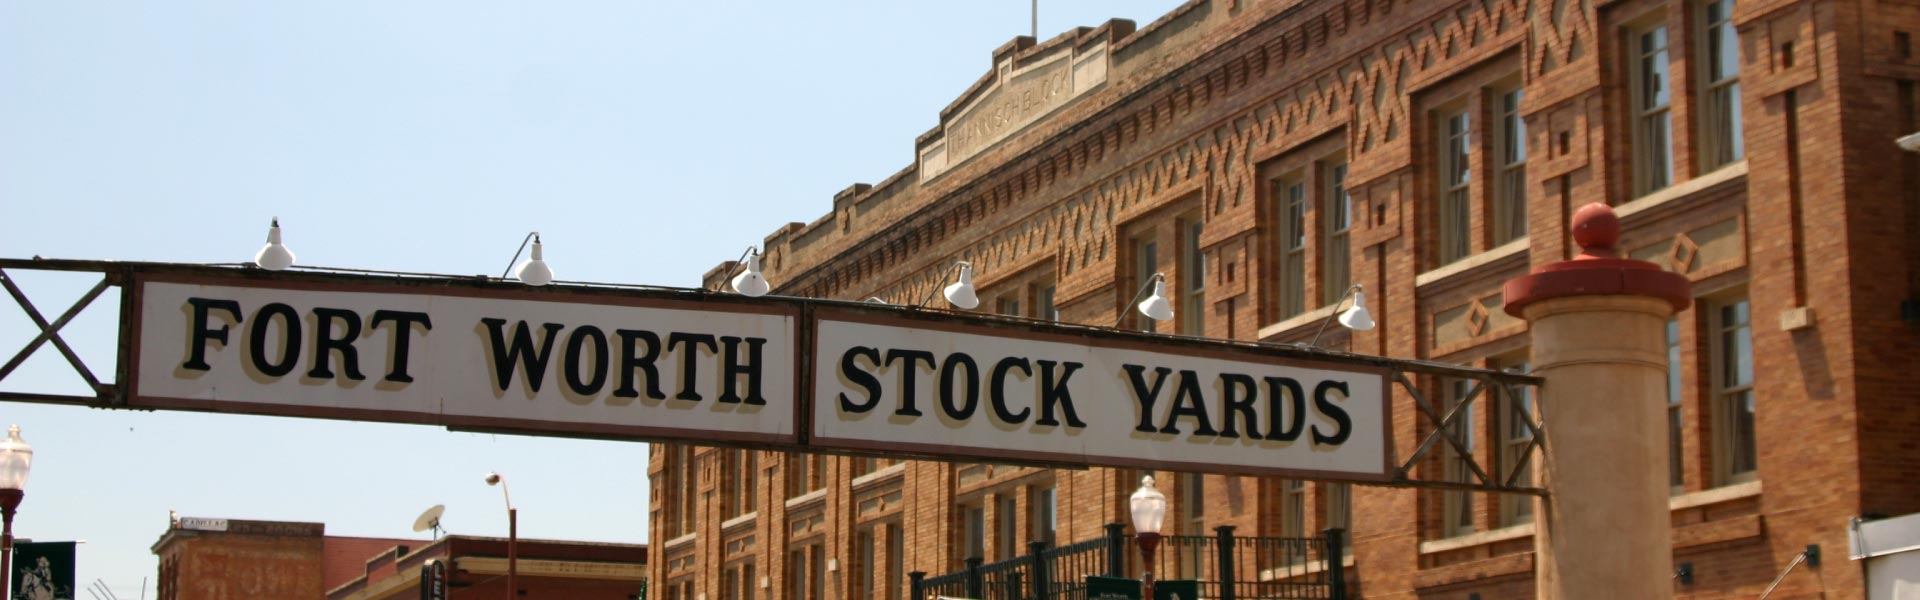 North Fort Worth Stockyards sign